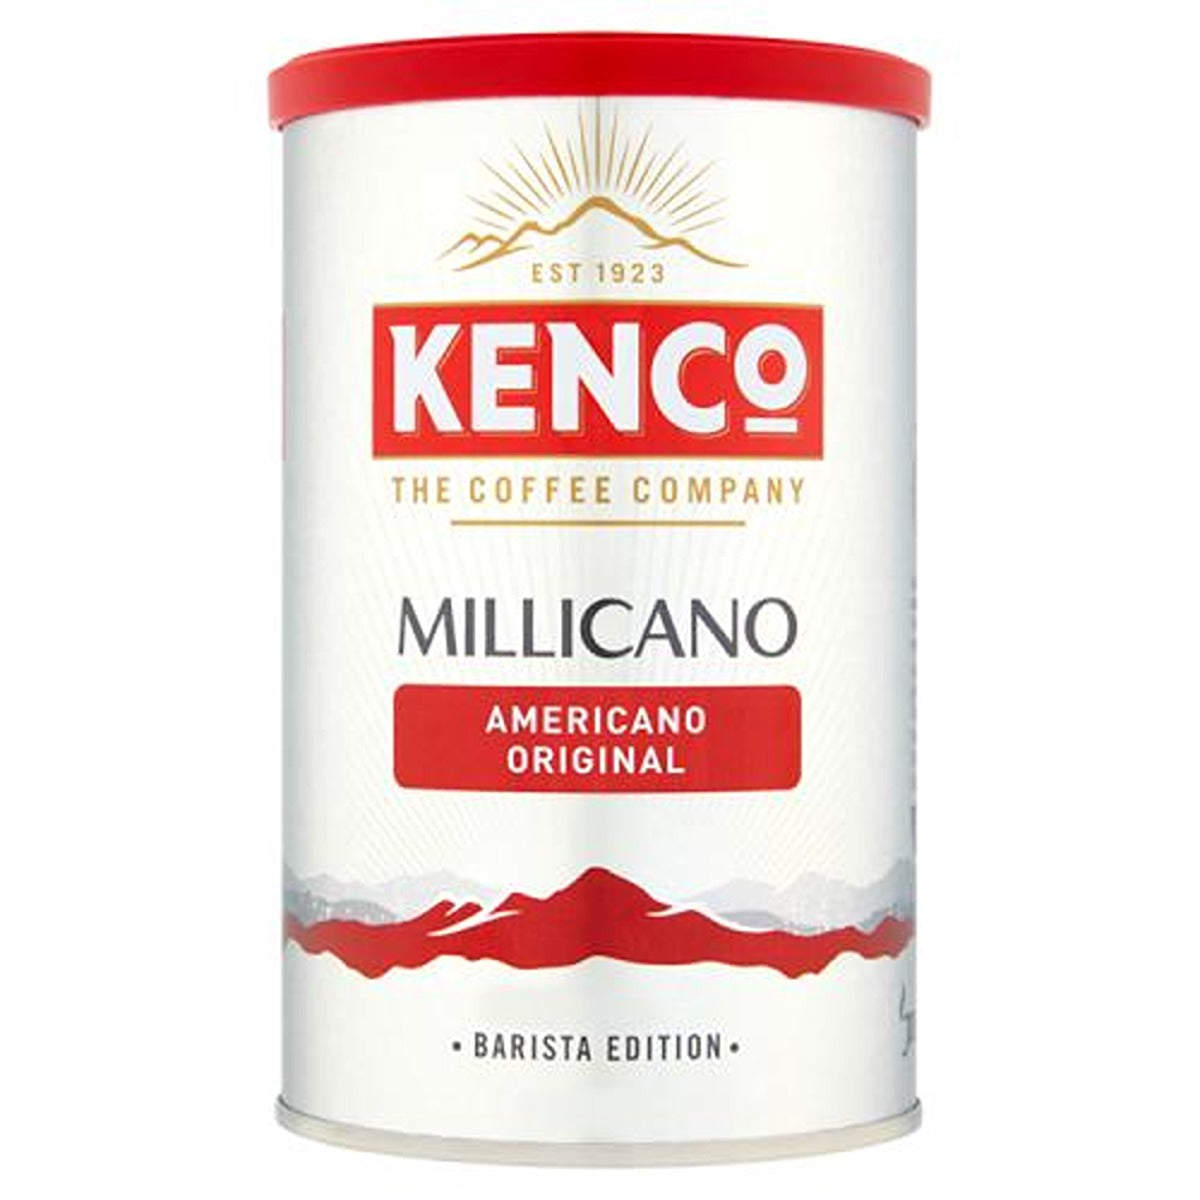 Kenco - Millicano Americano Original - 100g coffee company Kenco.